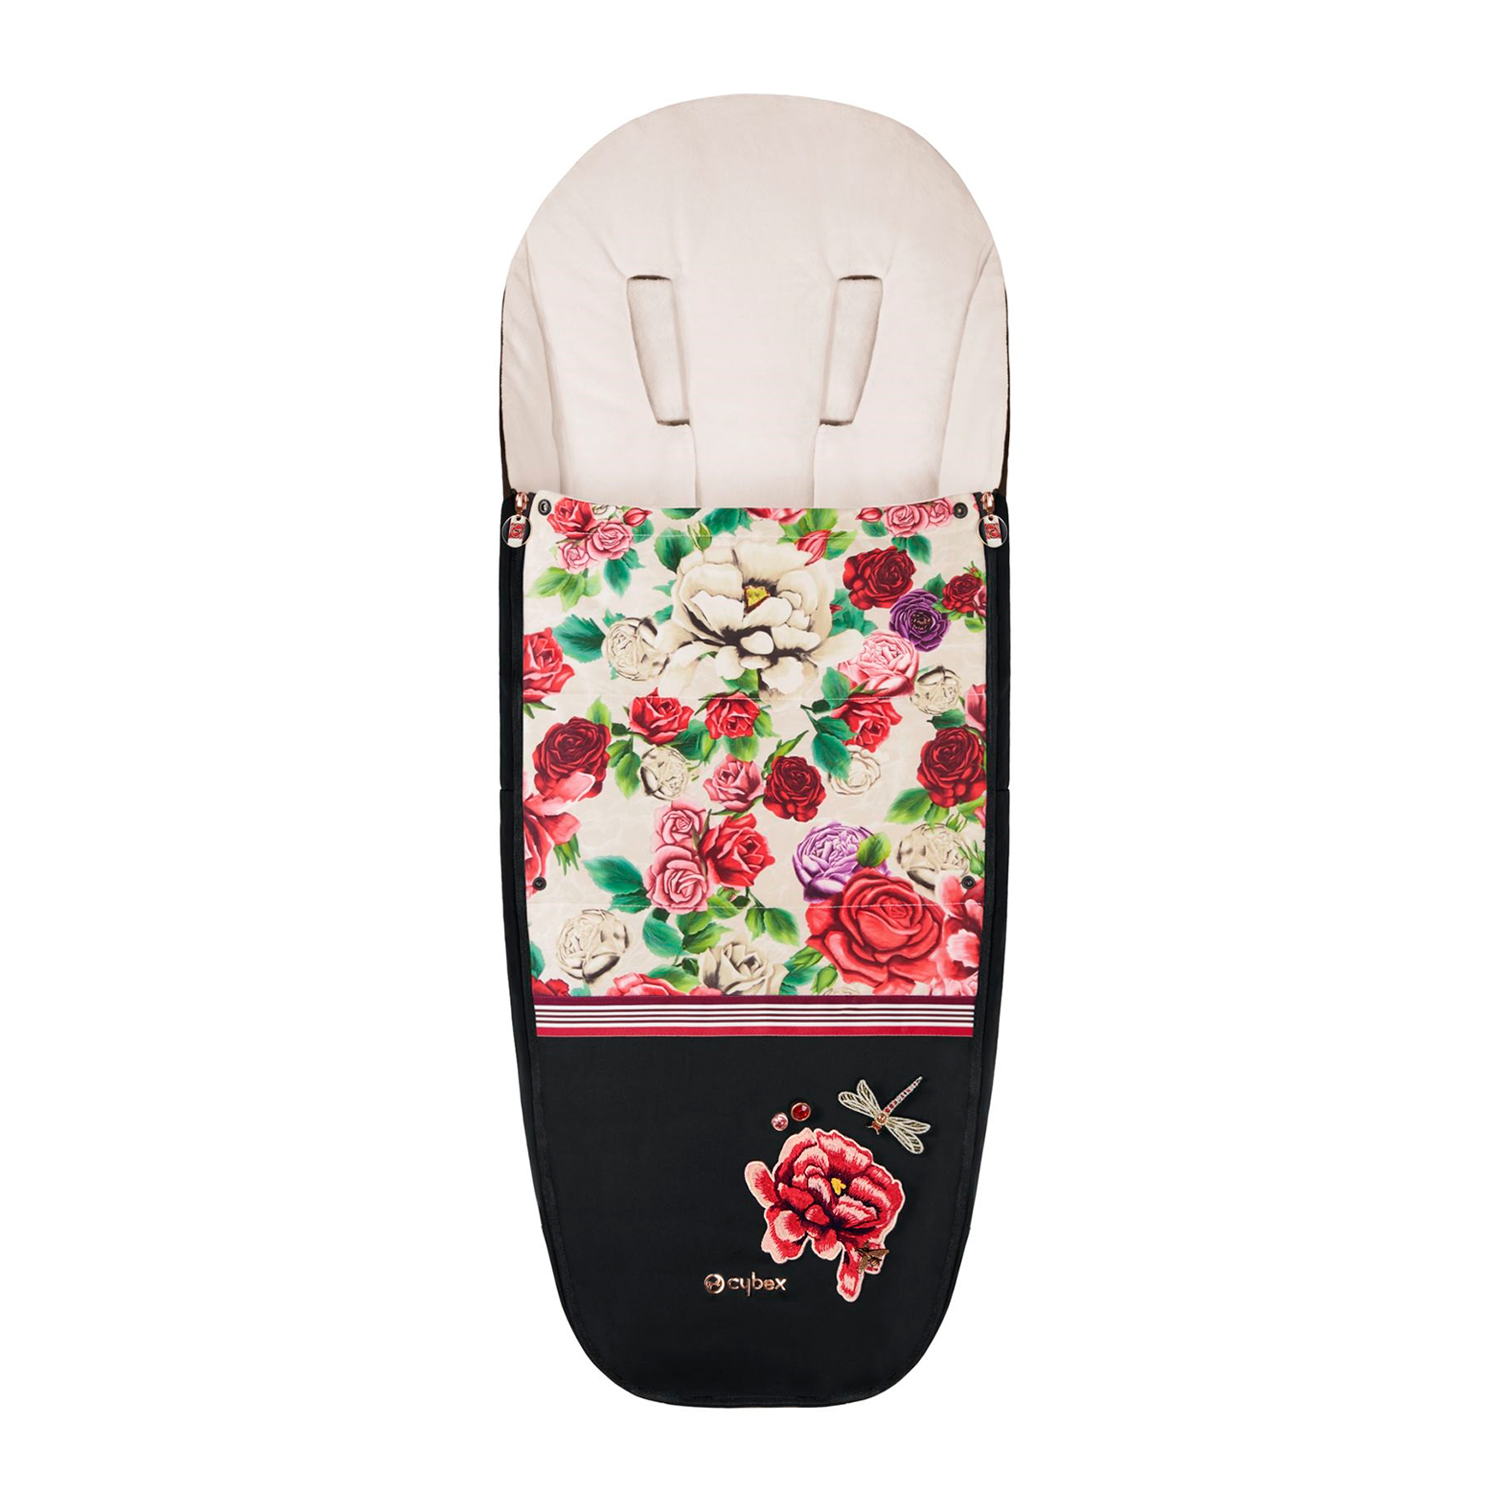 Накидка для ног для коляски Cybex PRIAM Spring Blossom Light, цвет нет цвета - фото 1